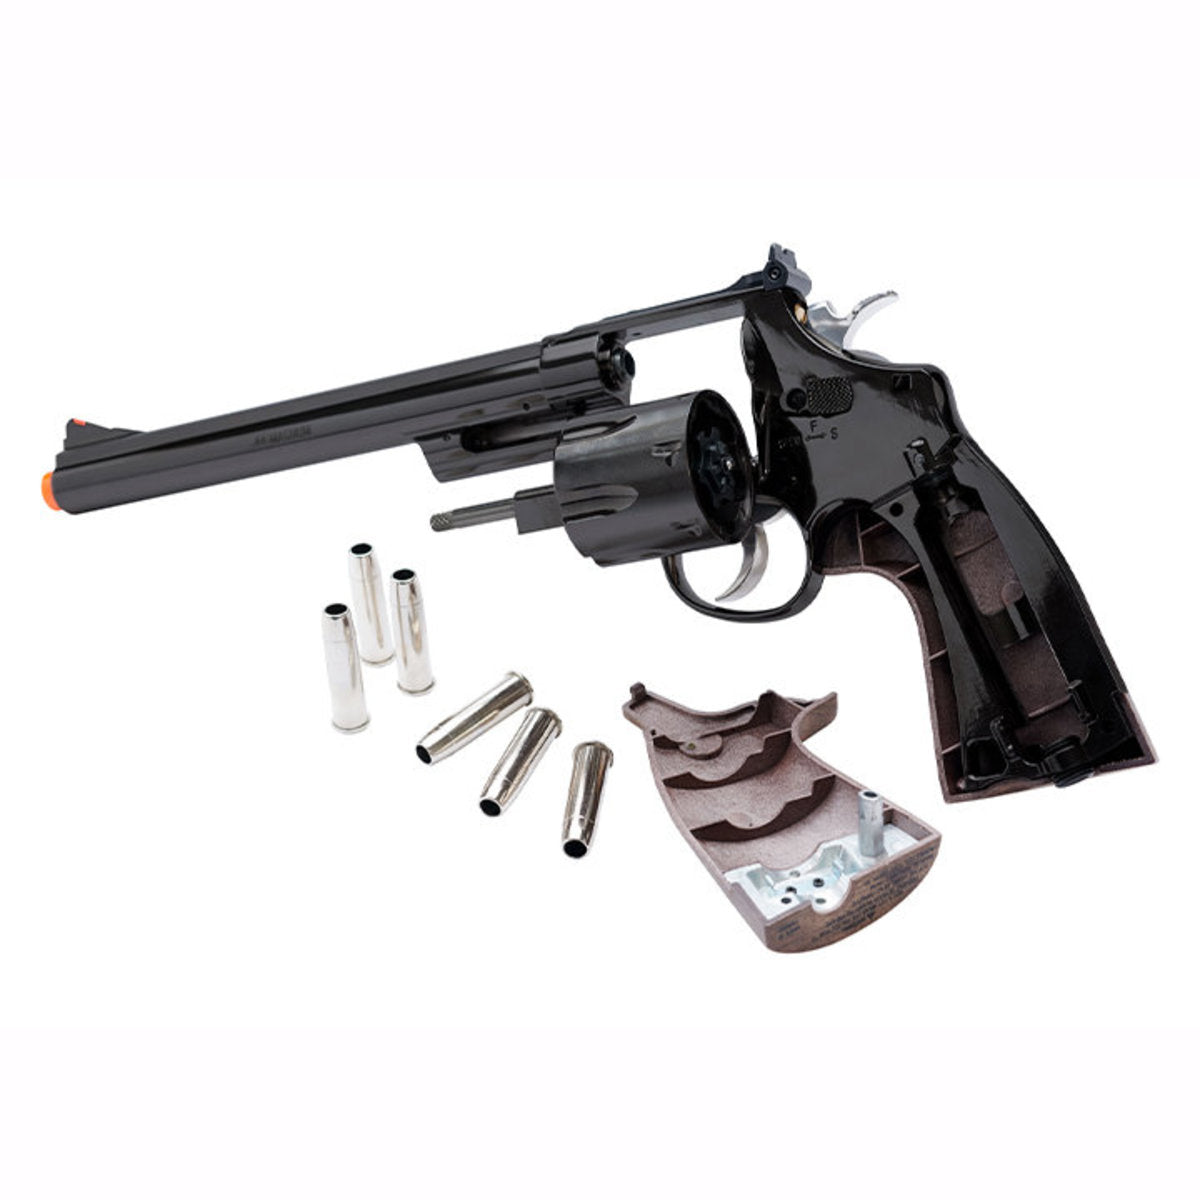 Umarex 8-3/8" S&W M29 44 Magnum "Dirty Harry" Co2 Powered Airsoft Revolver